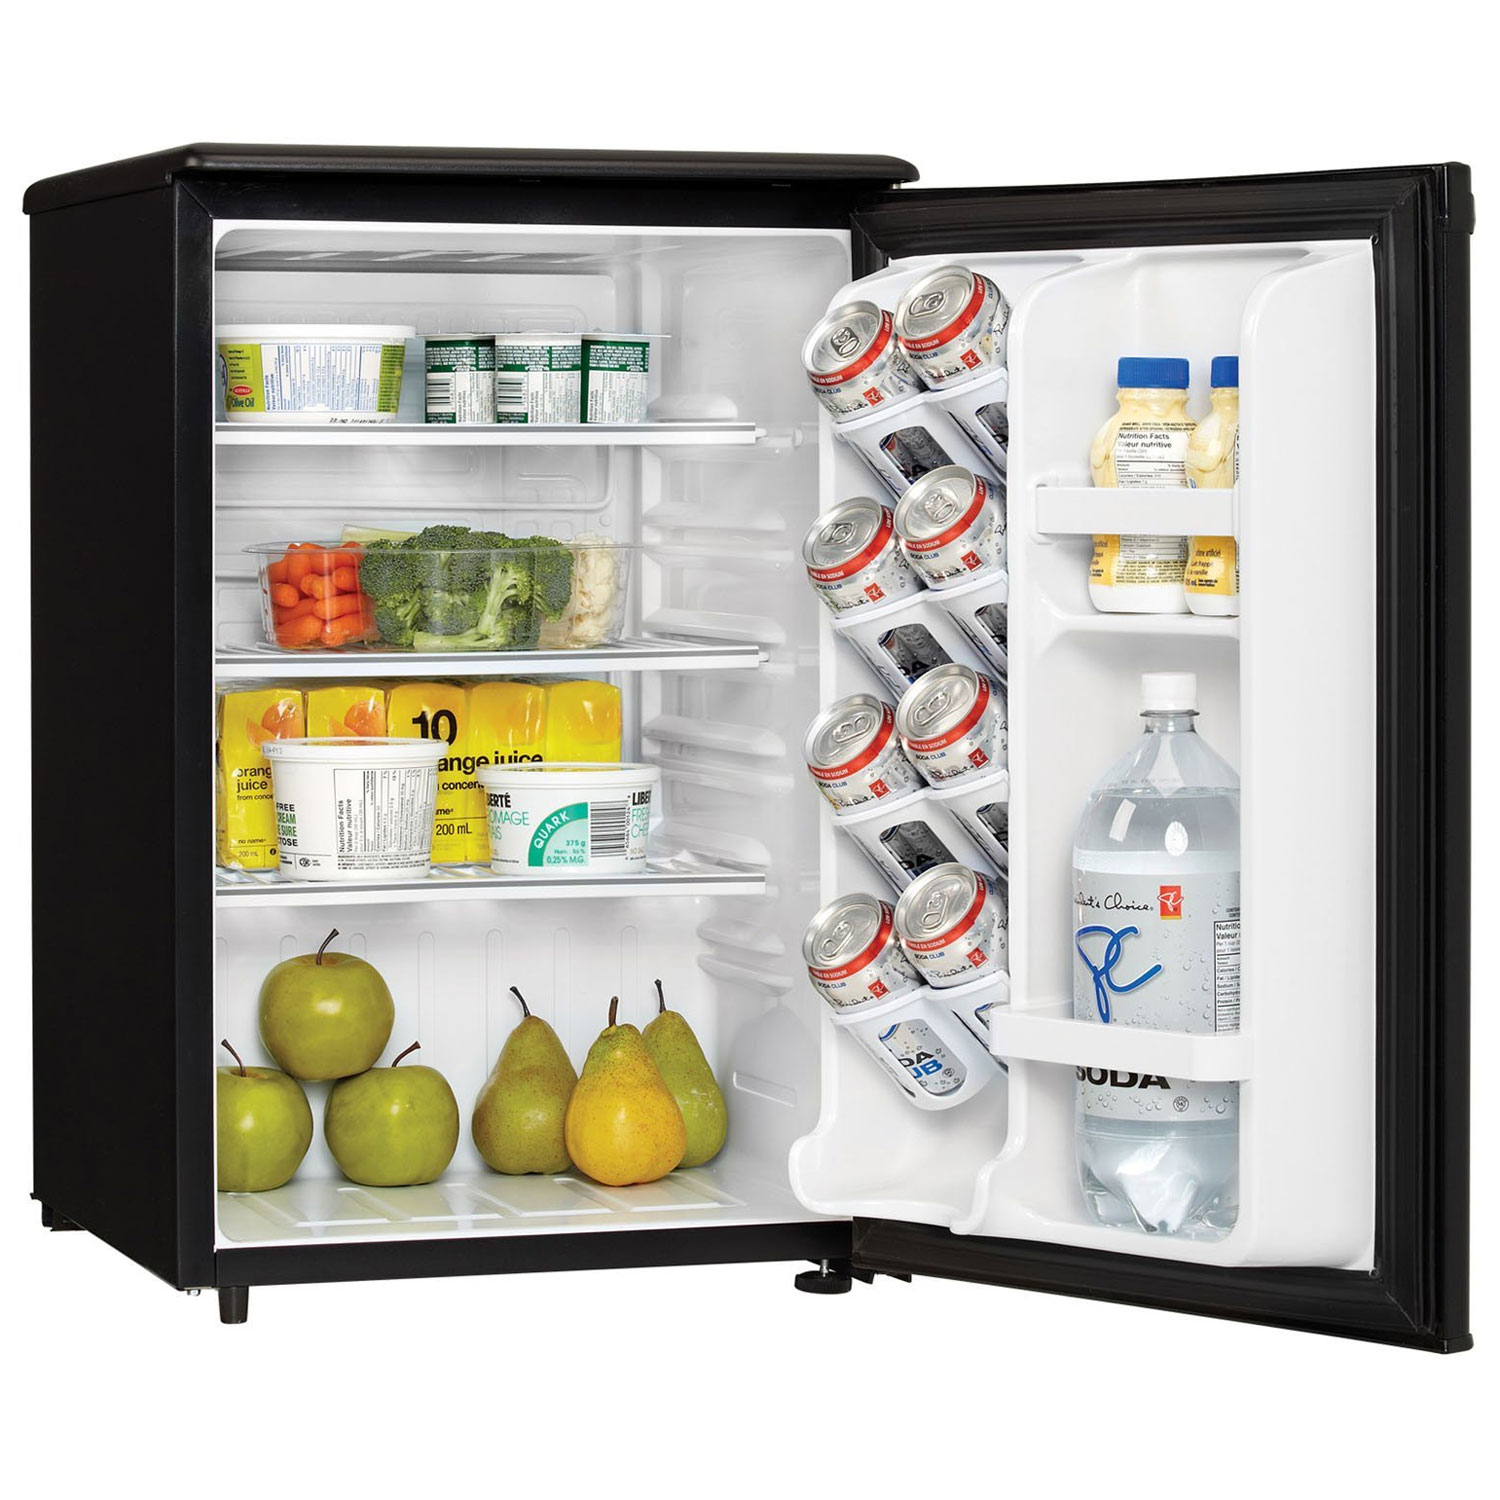 Danby DAR026A1BDD Compact Refrigerator - 2.6 Cu. Ft., Black ...